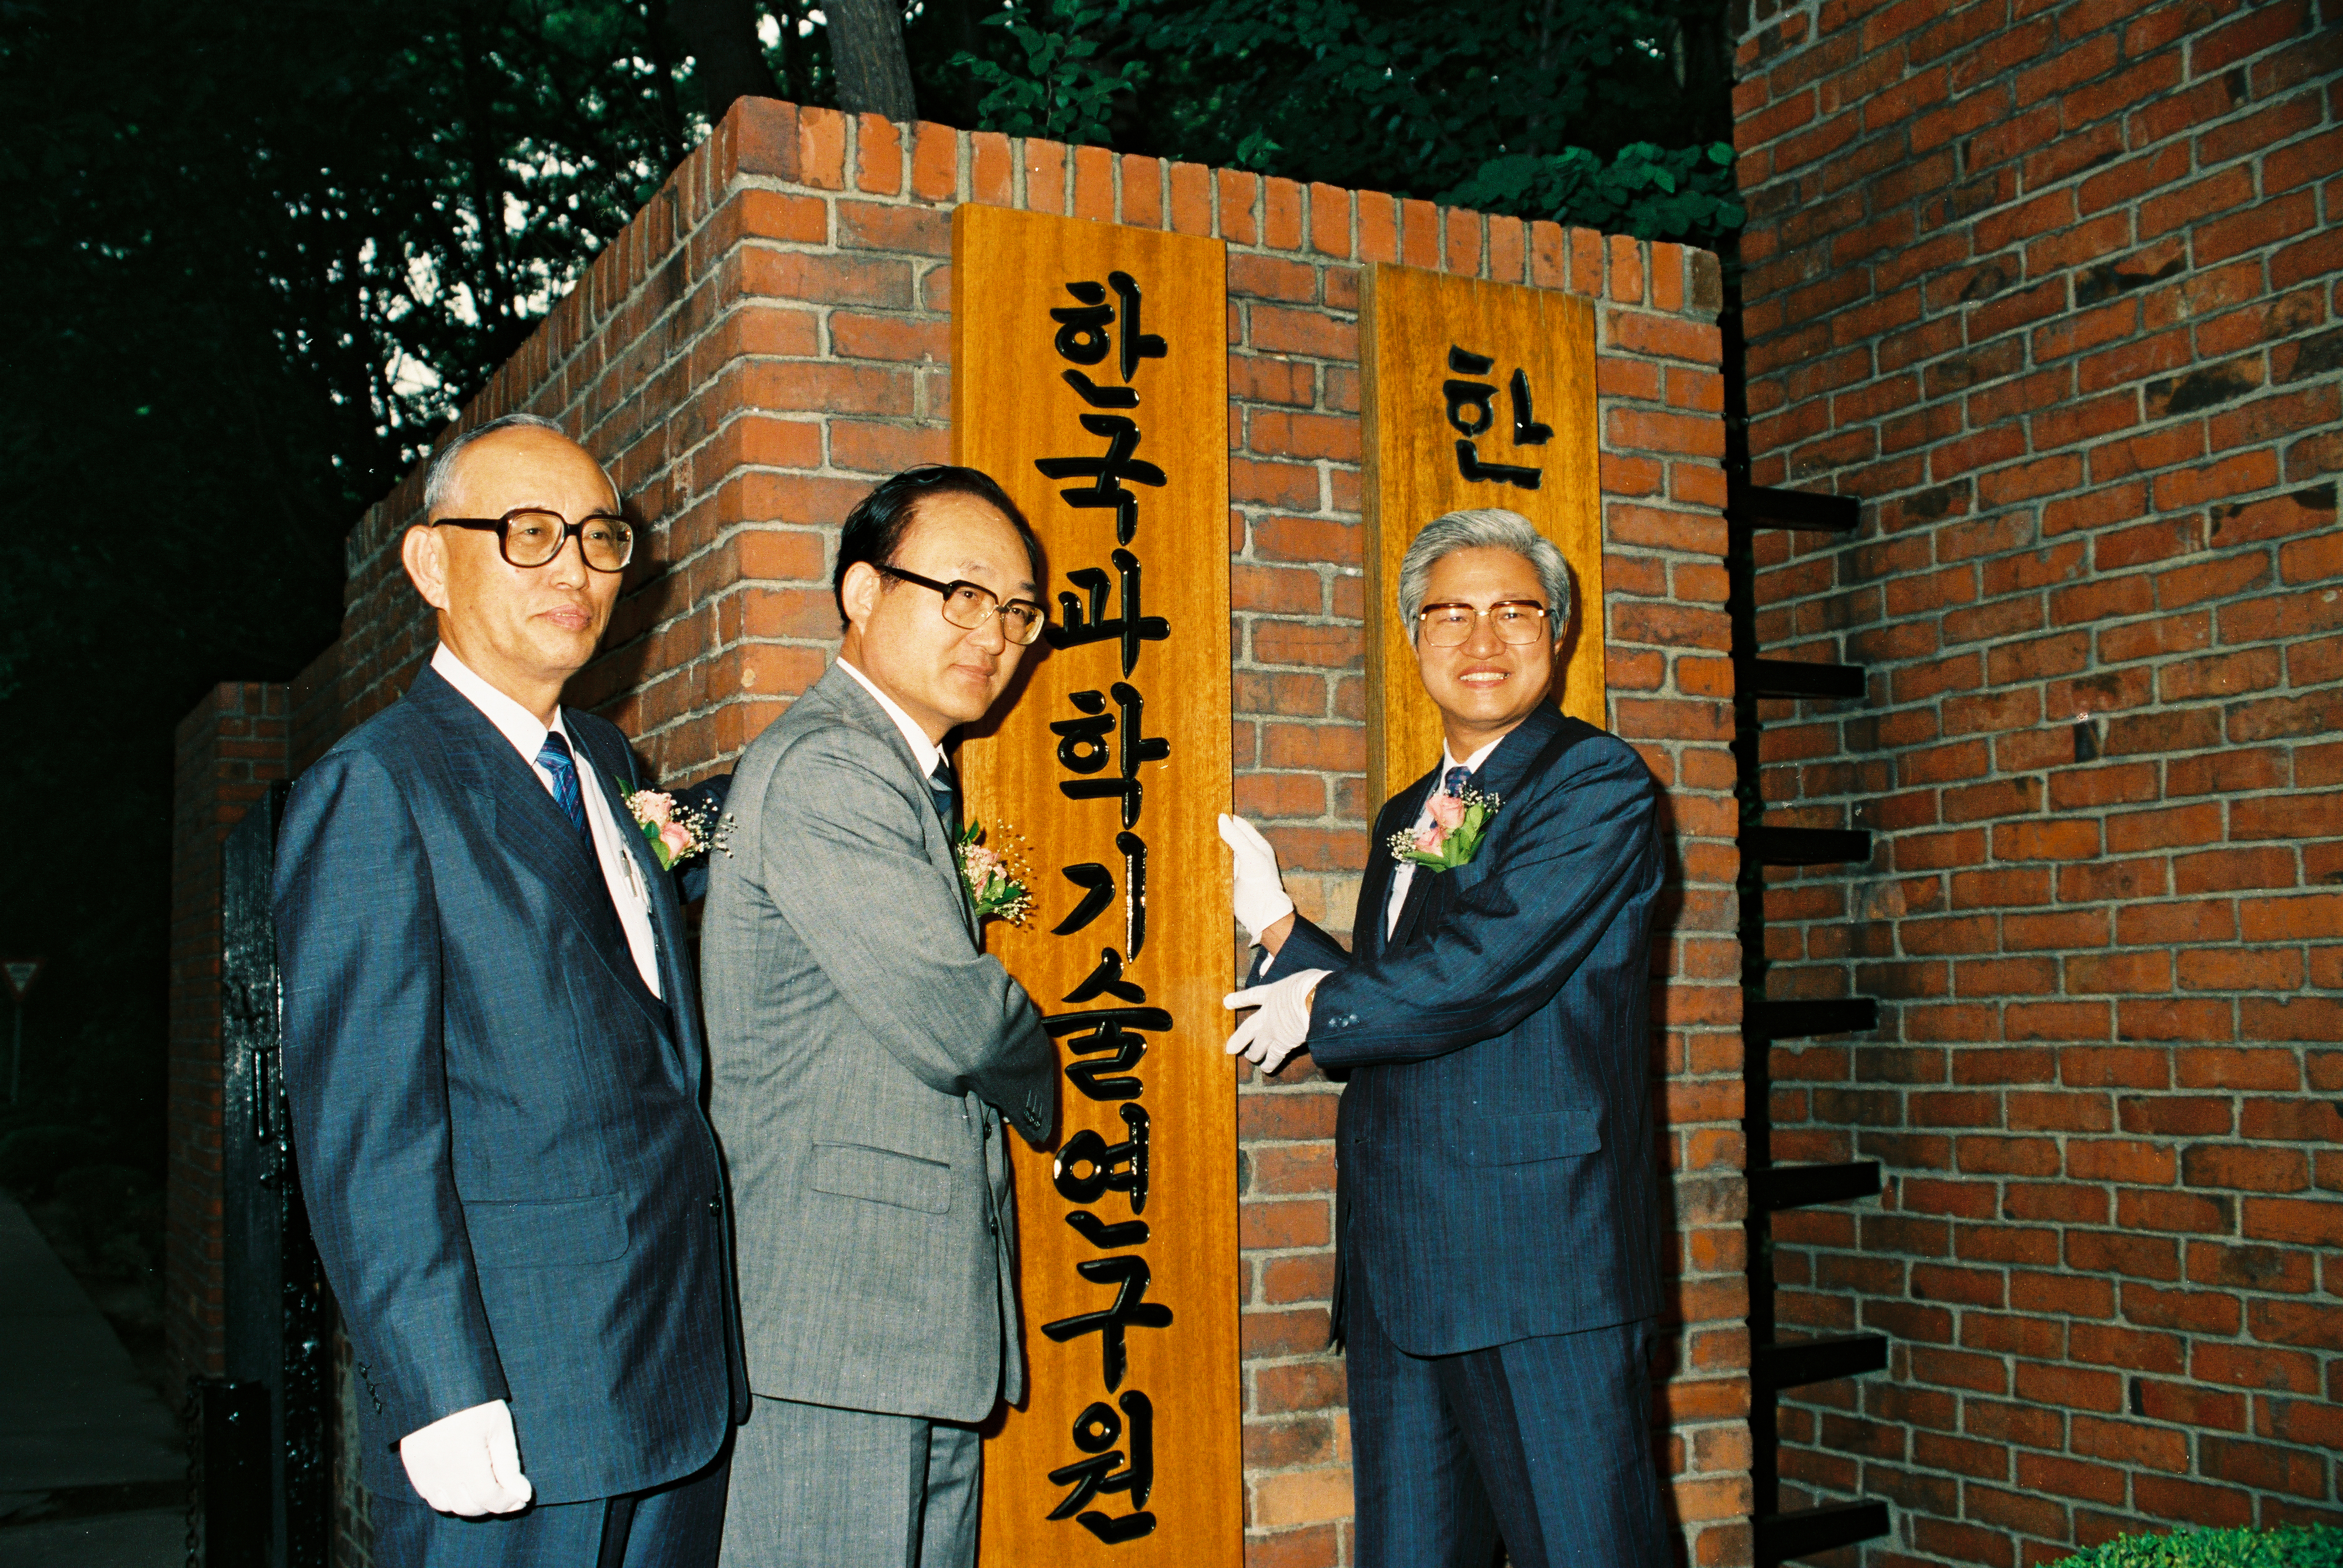 KIST는 1981년 KAIST를 설립, 통합해 운영되다가 1989년 6월 30일 연구기관으로 독립 분리돼 정부출연연구기관의 모델이 됐다. KIST 제공